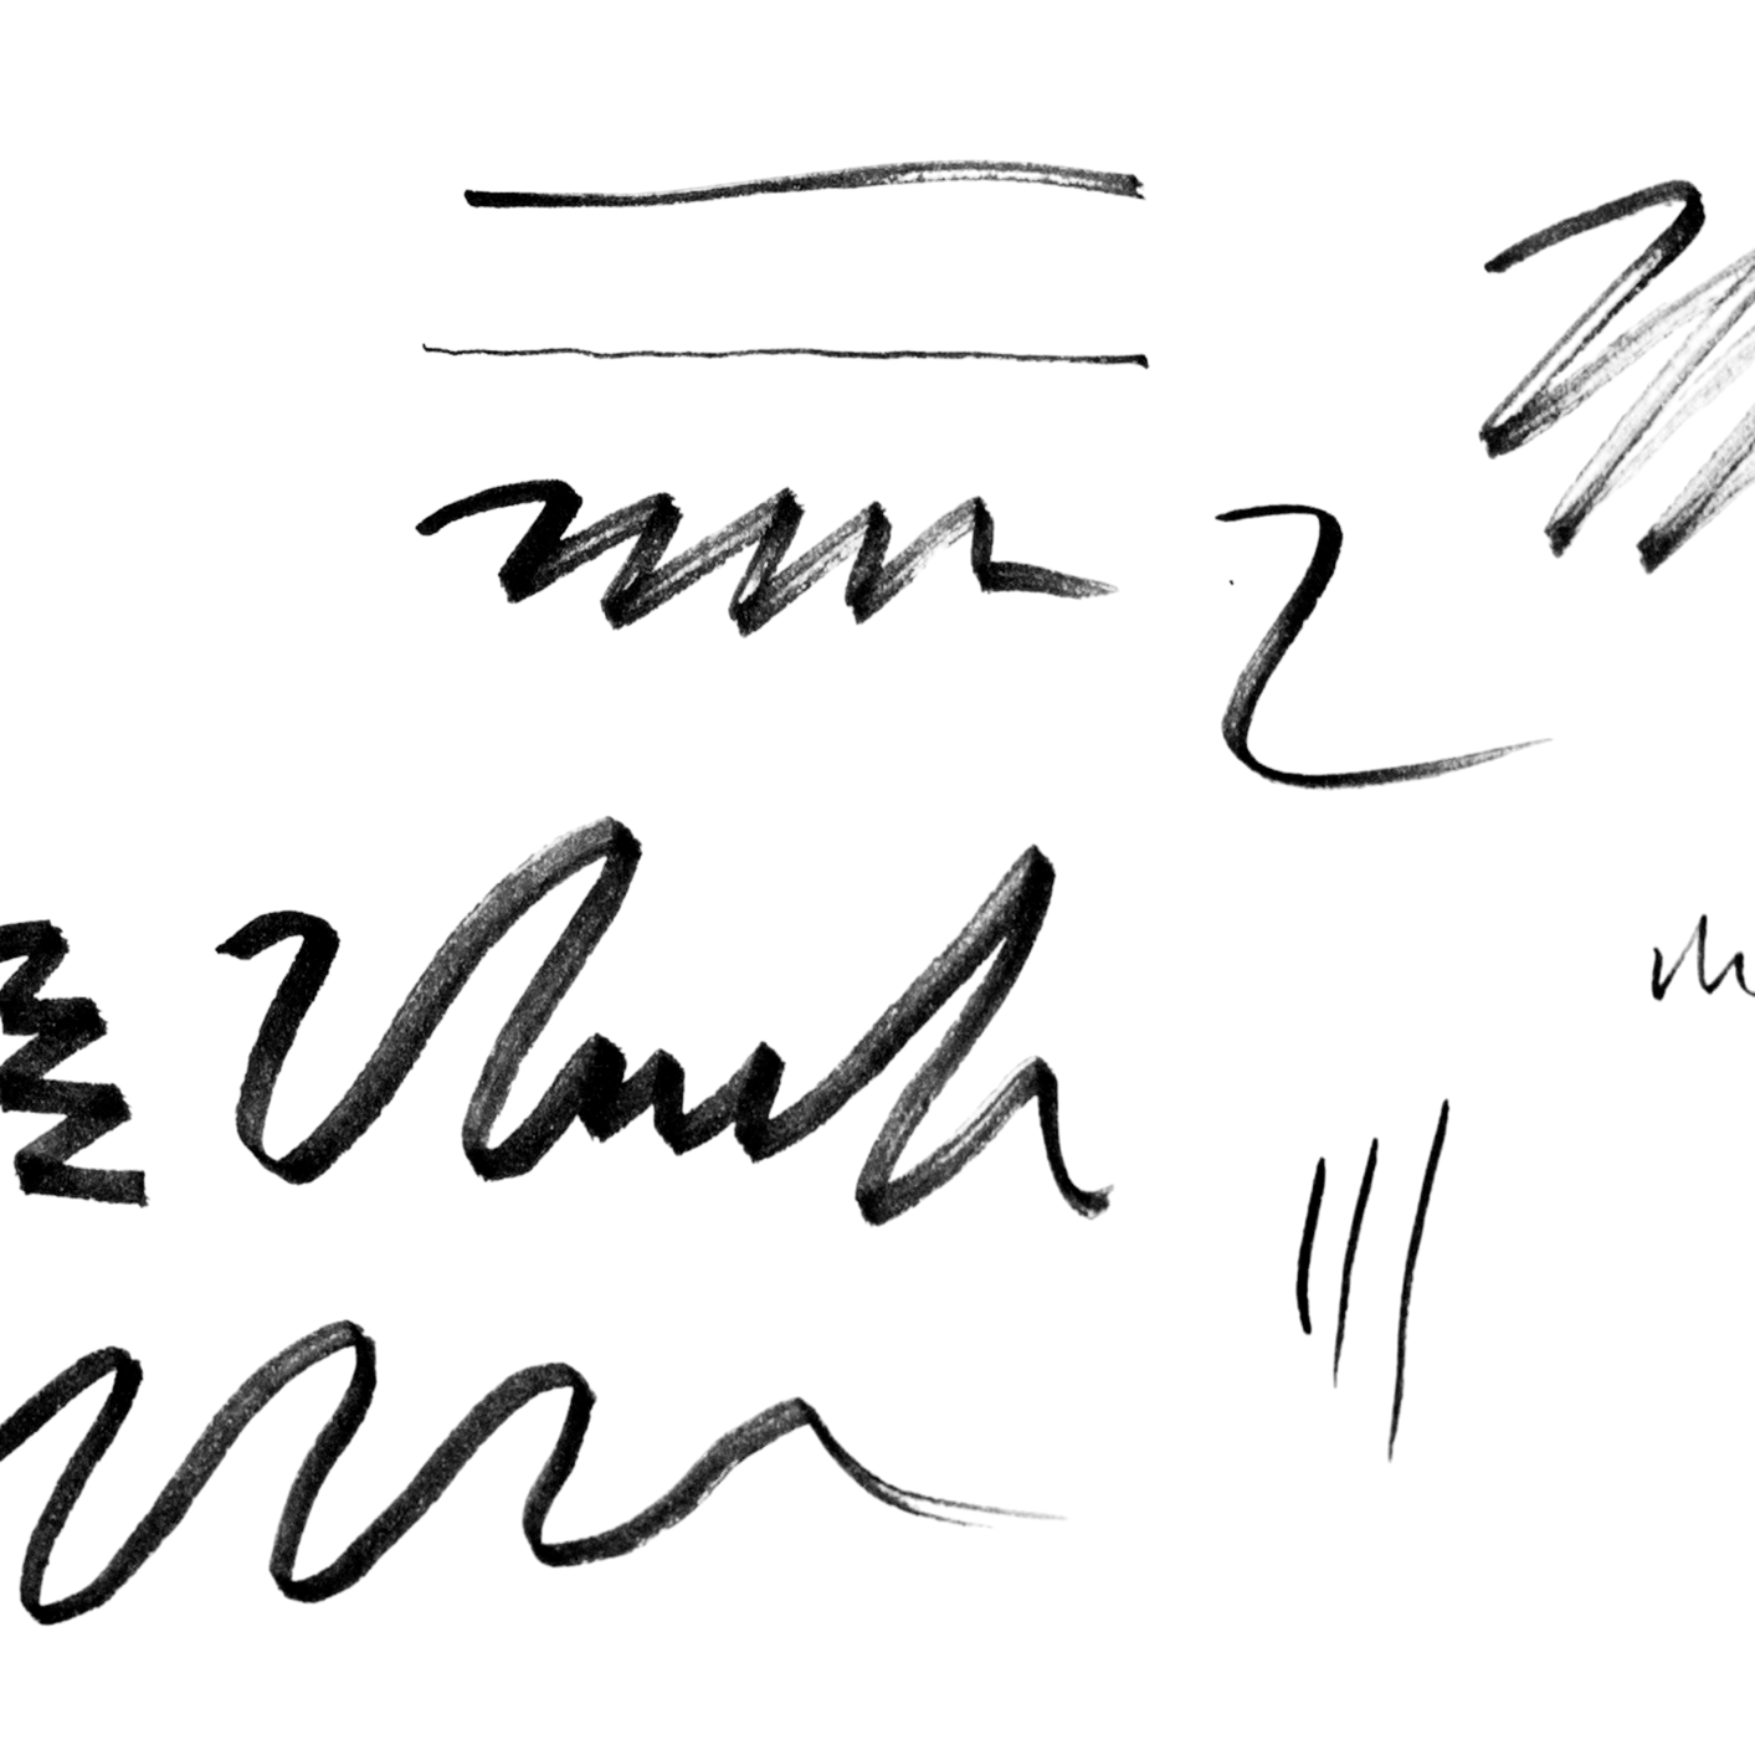 Tombow Fudenosuke Calligraphy Brush Pen